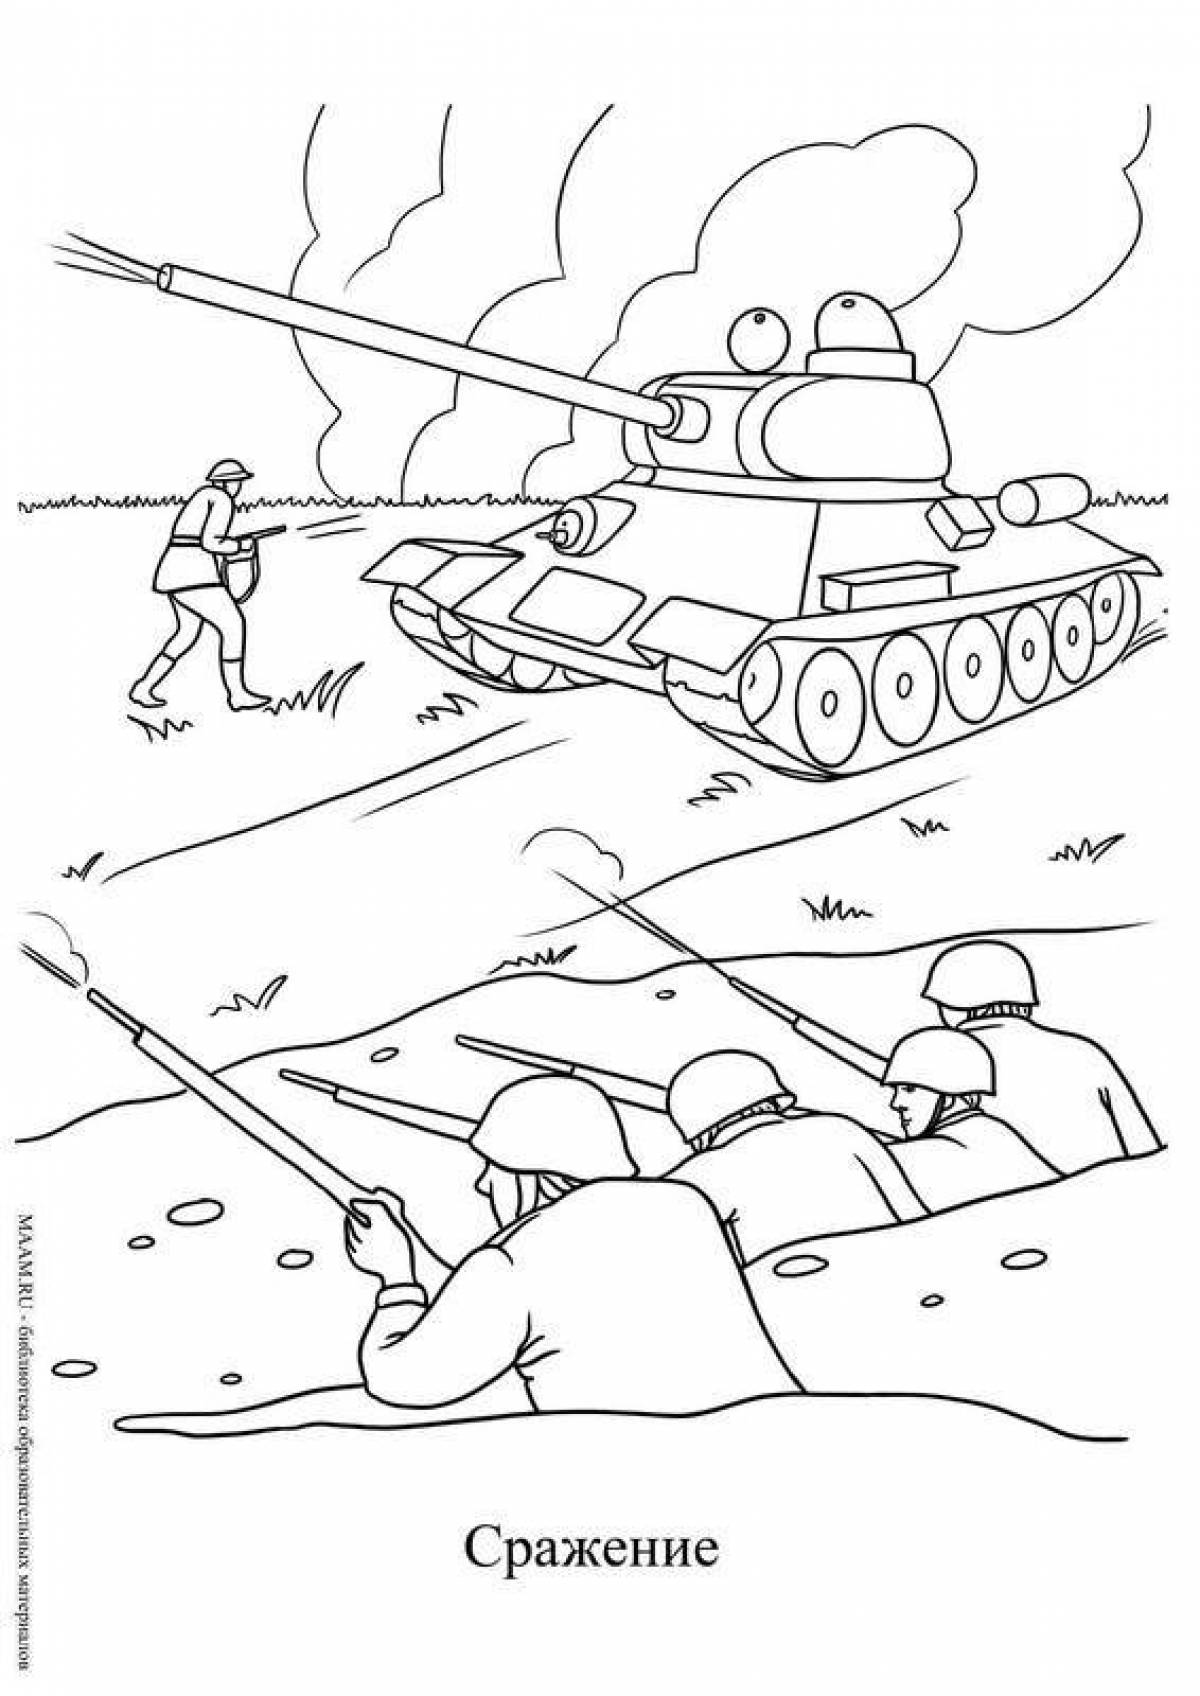 Coloring book joyful battle of Stalingrad for children